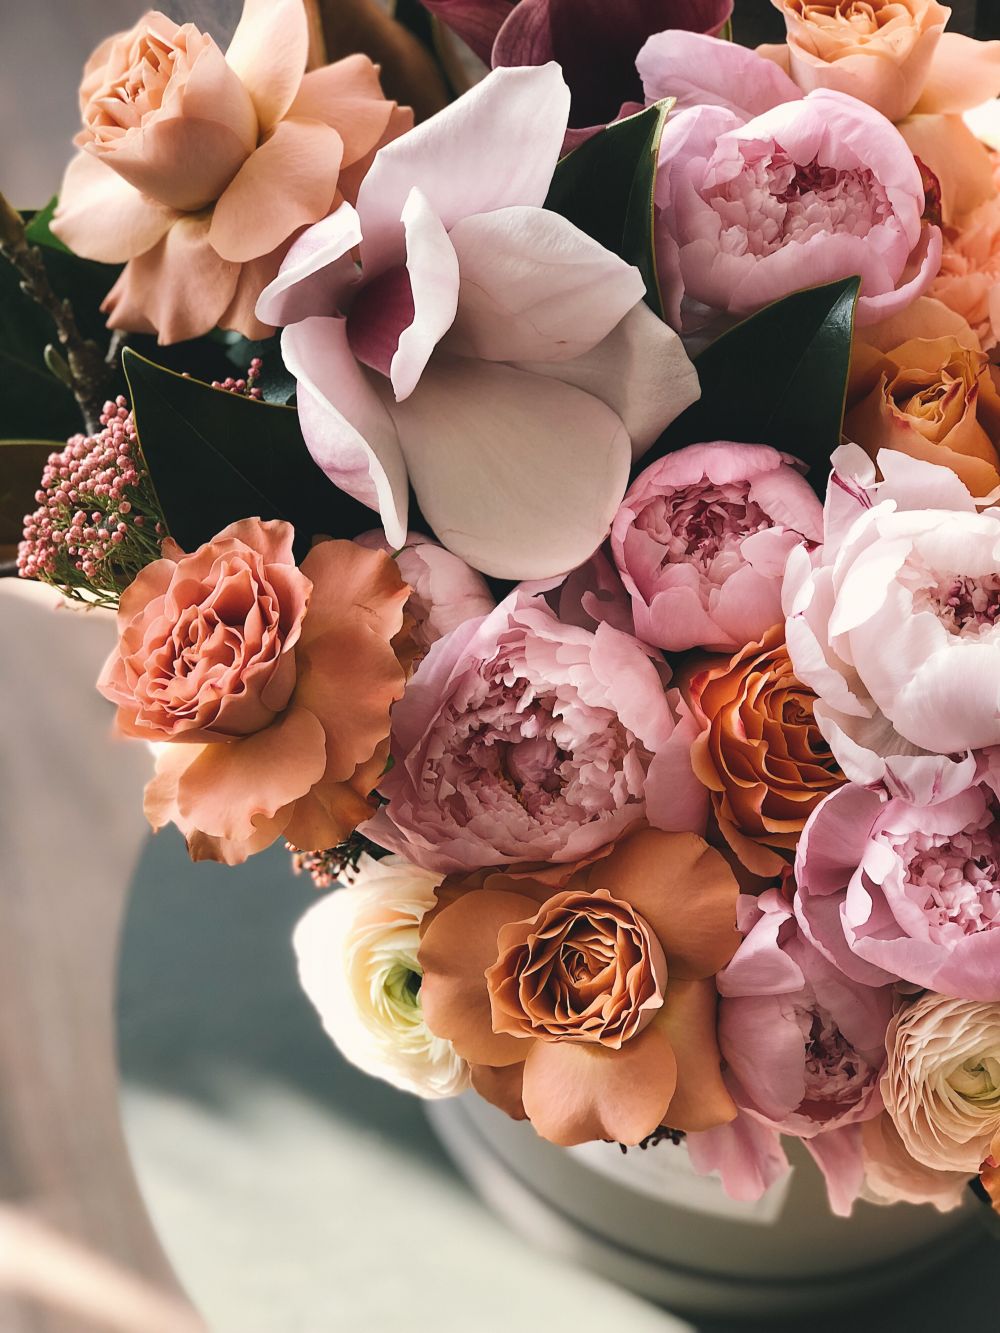 Blommogram i Stockholm: Skicka blommor med kärlek och omtanke